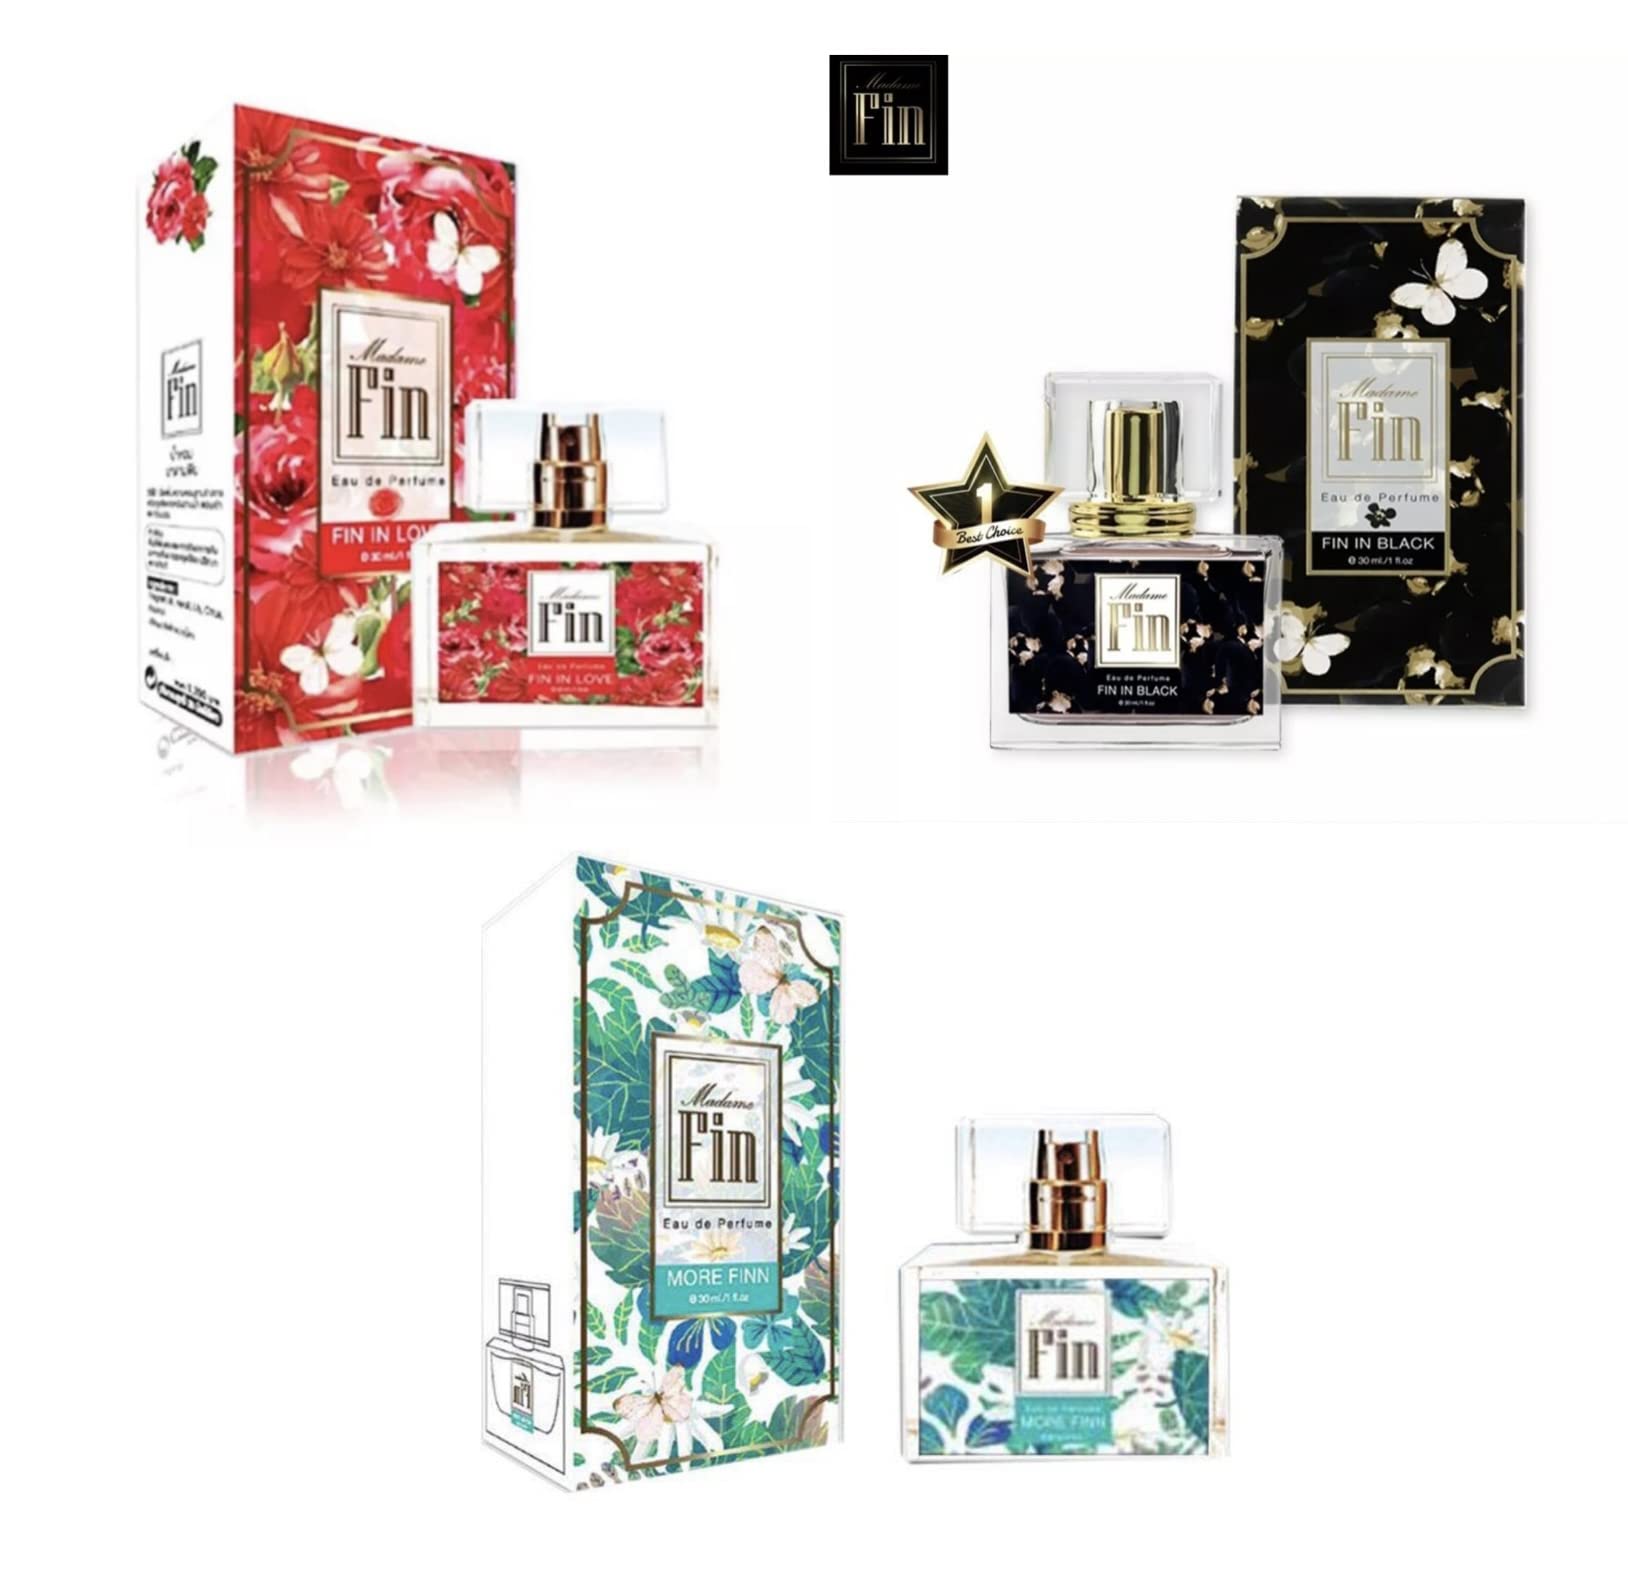 3pcs,Madame Fin Perfume Eau de Parfum Premium Quality Product 30 ml./60-90days (FIN IN BLACK+MORE FINN+FIN IN LOVE) By PNICE PERFECT